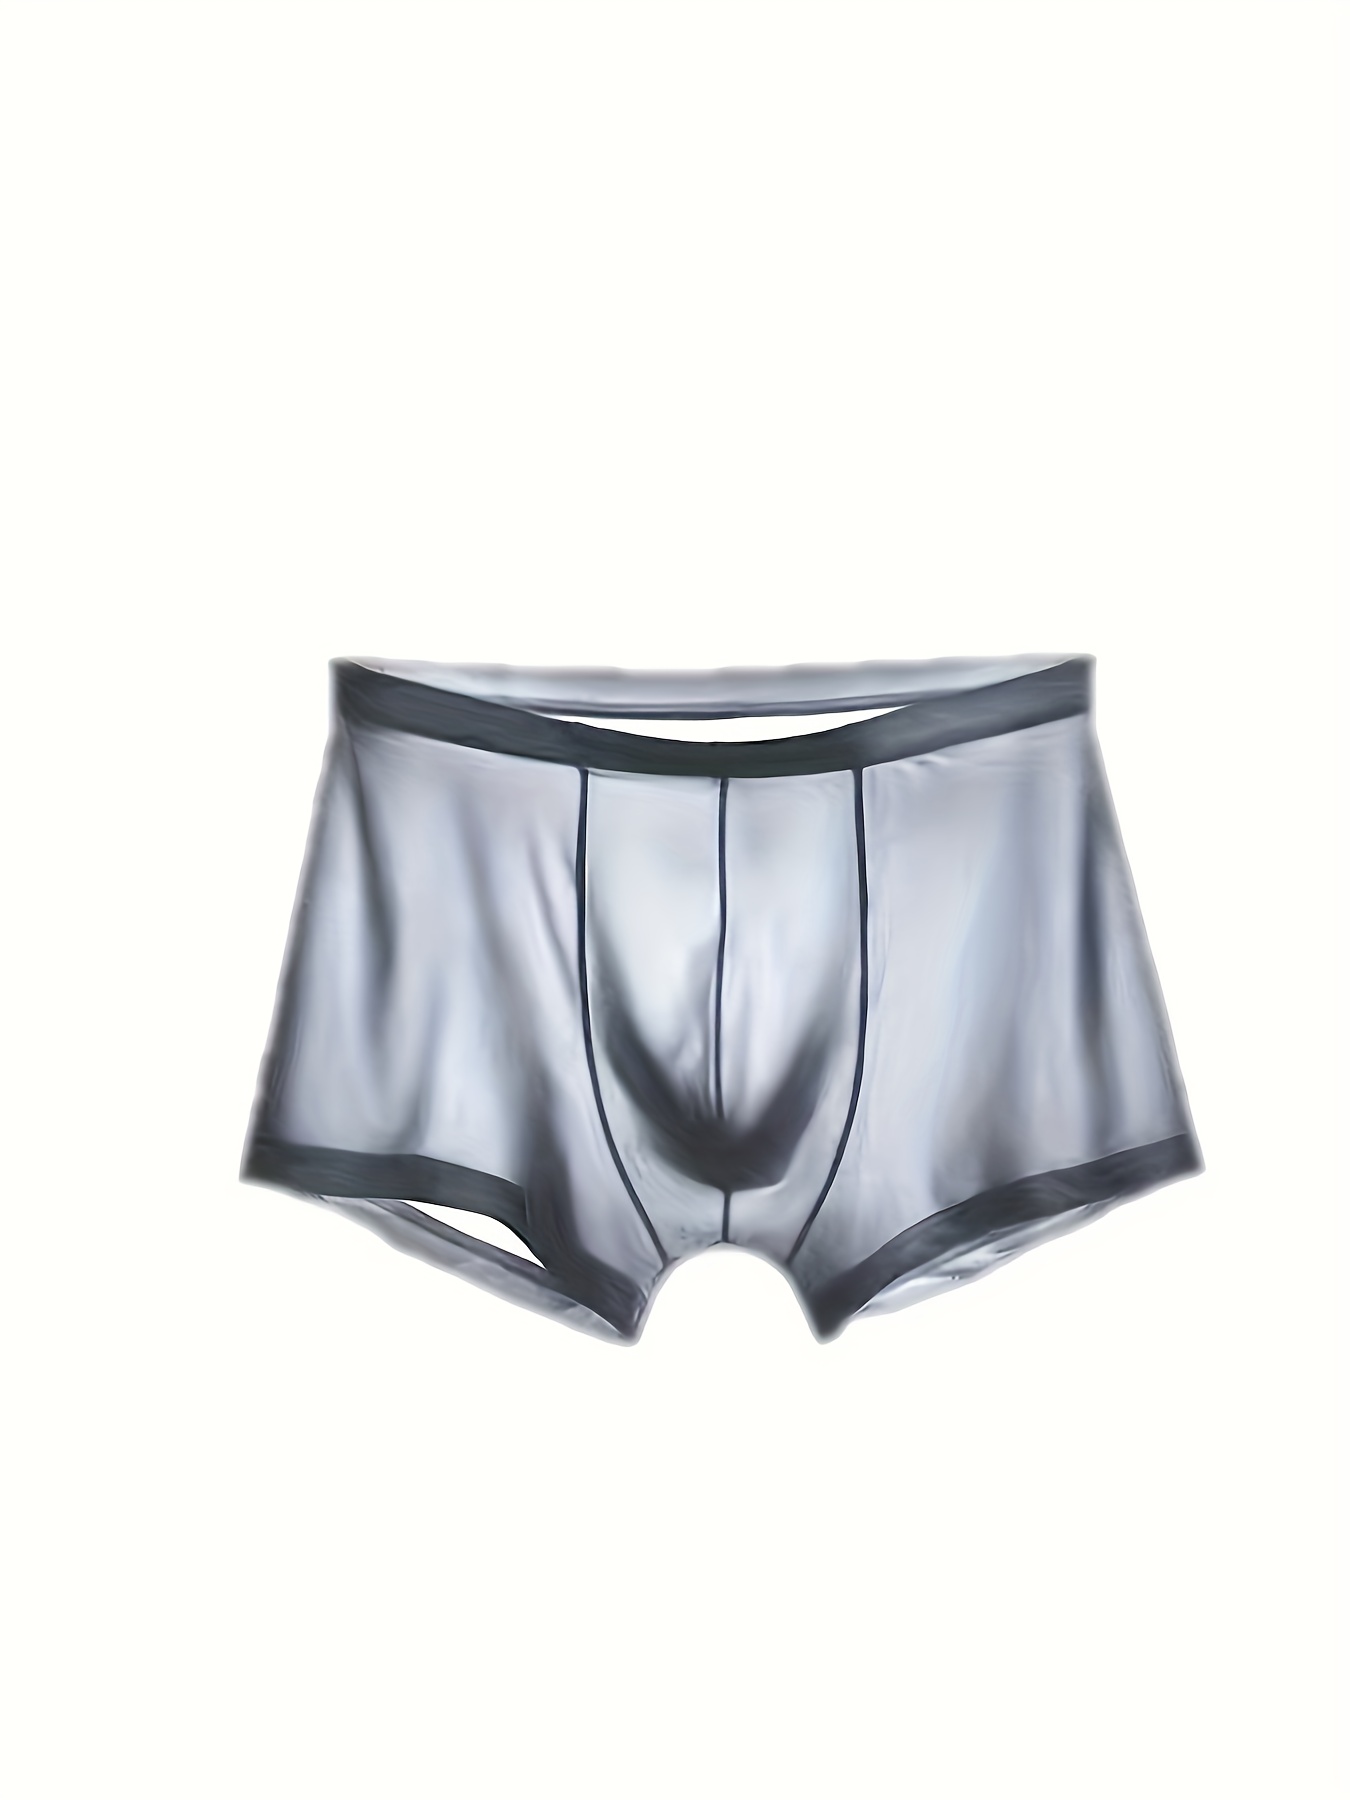 Men's Medium and High Waist Seamless Underwear Comfortable